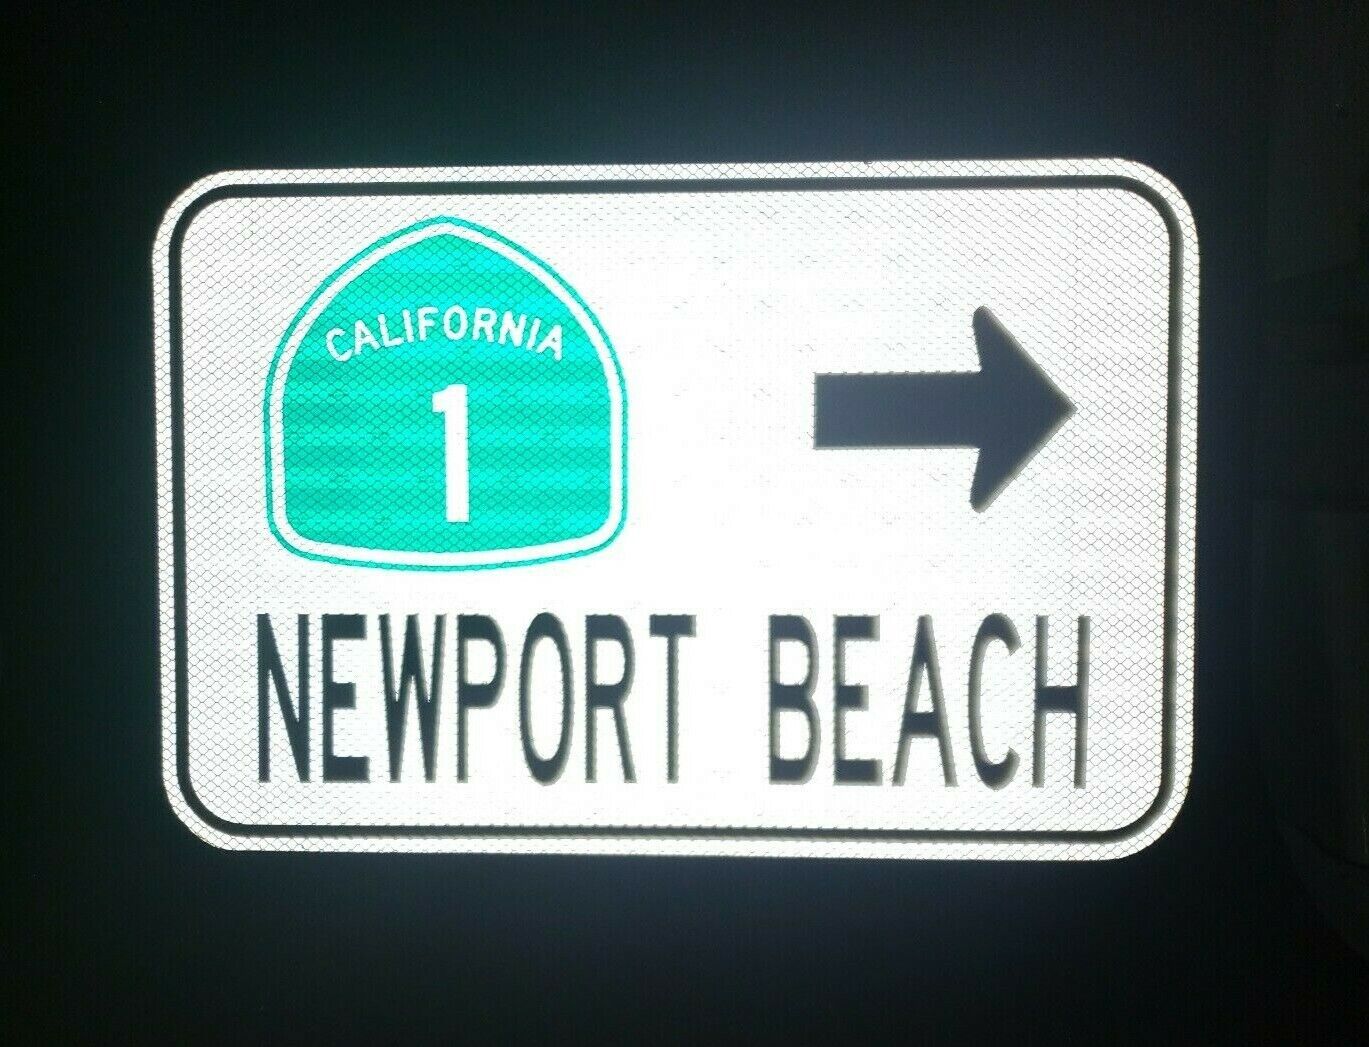 NEWPORT BEACH HWY 1 route road sign, California, Pacific Coast Hwy, Balboa Pier